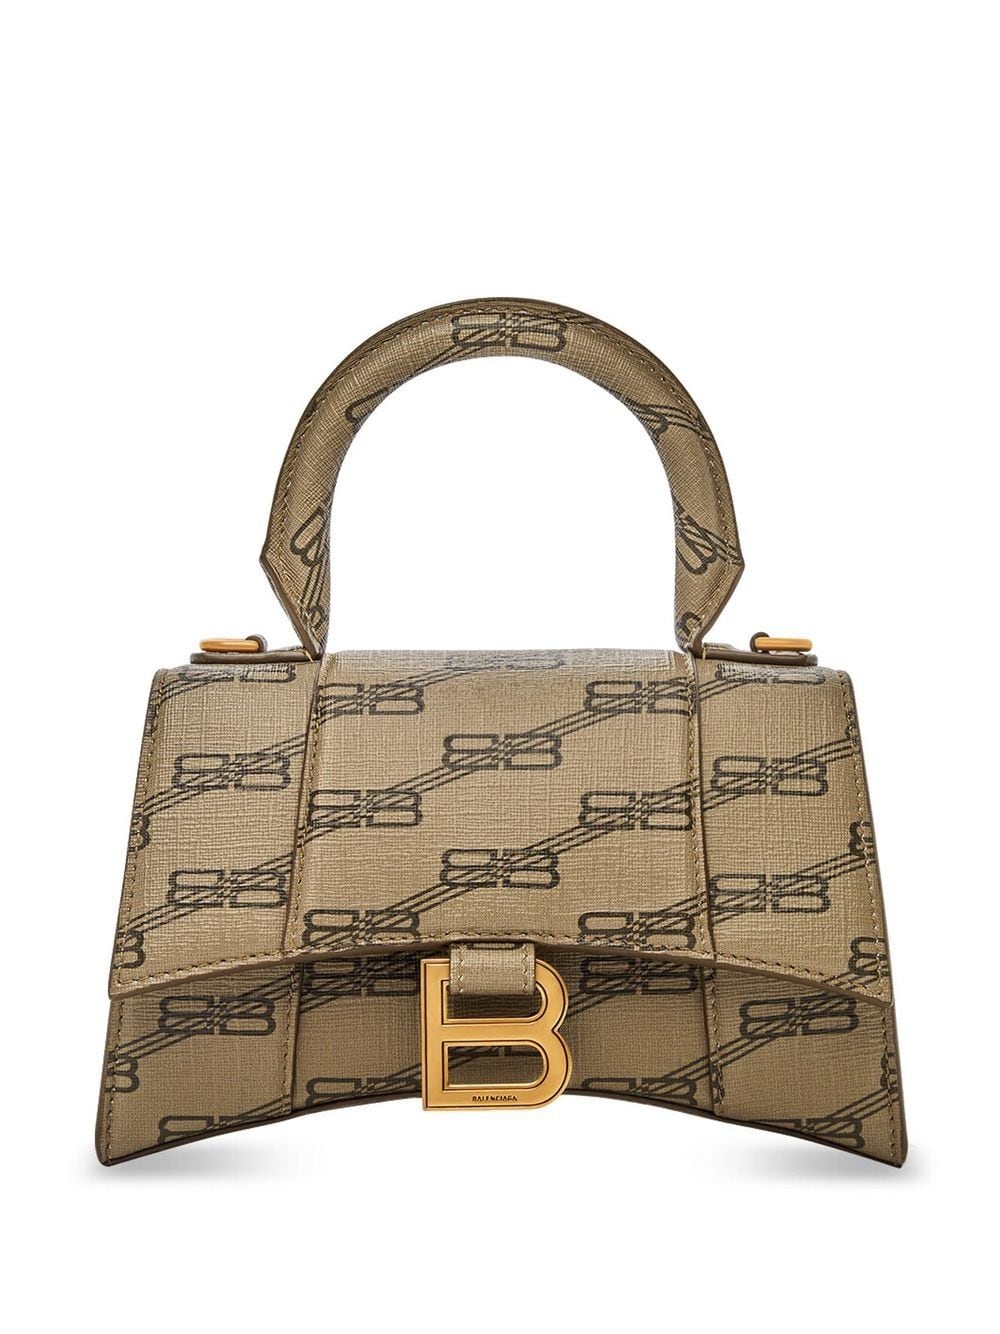 Gucci x Balenciaga Supreme Medium Hourglass Bag The Hacker Project  eBay